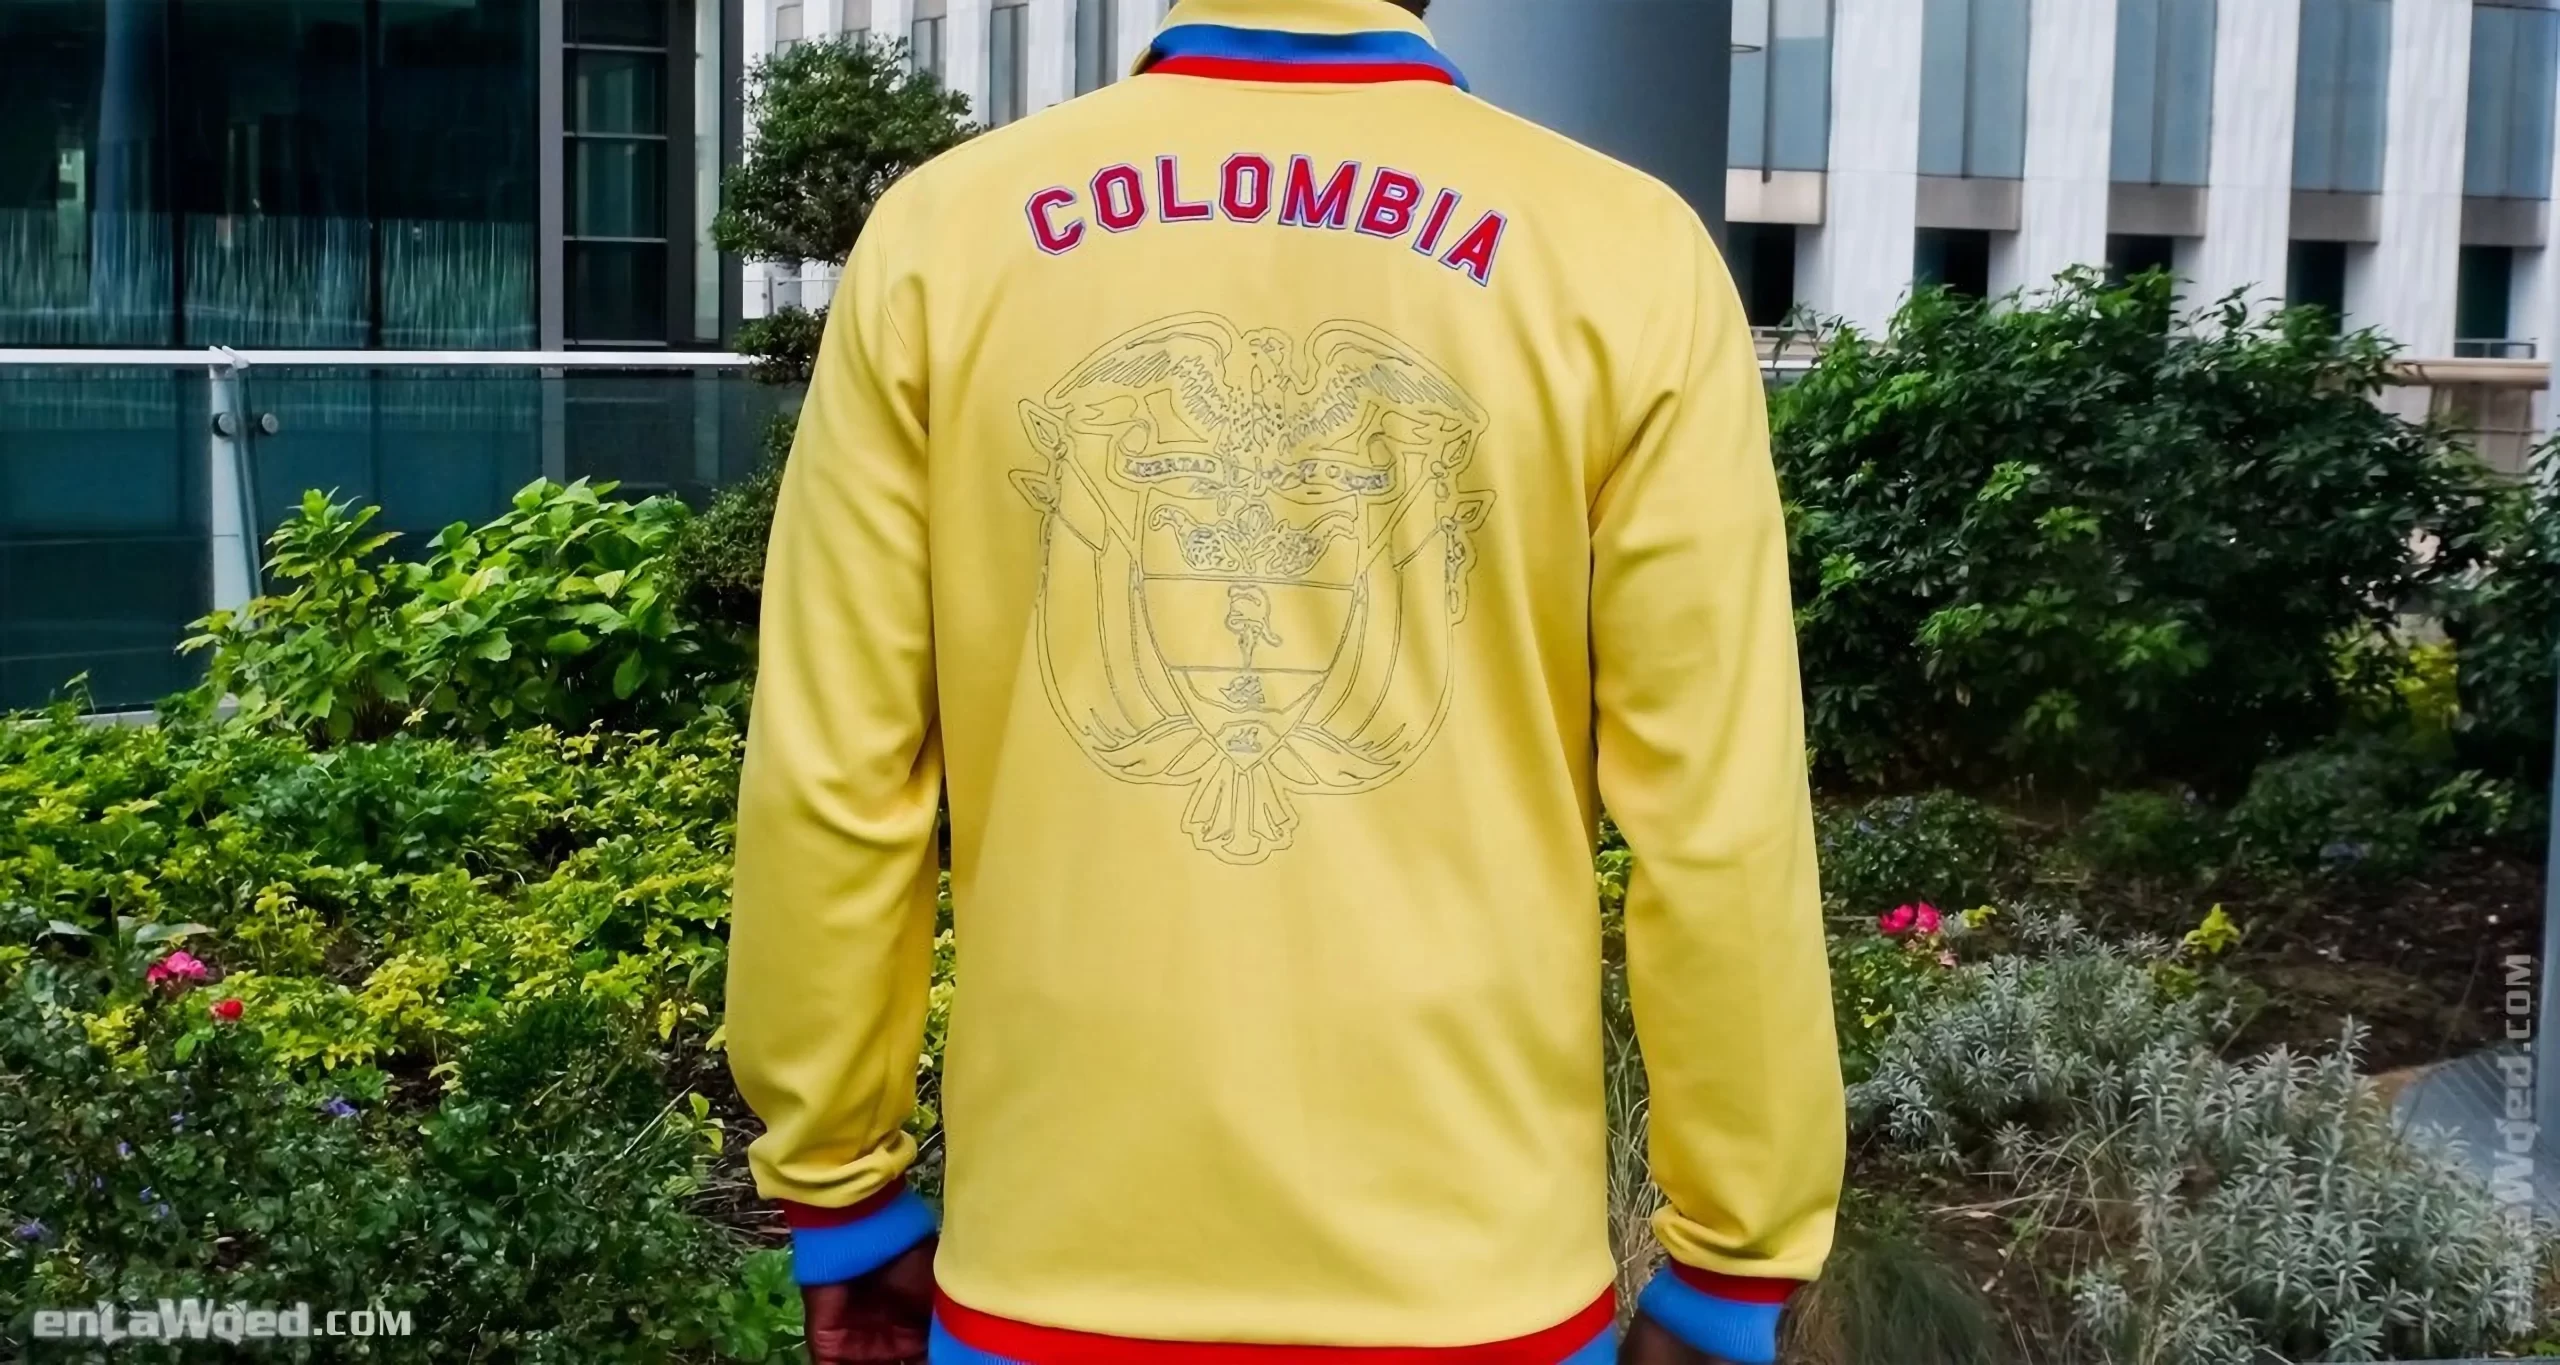 Men’s 2006 Colombia TT by Adidas Originals: Legitimate (EnLawded.com file #lmcf13bov93blxsffhe)